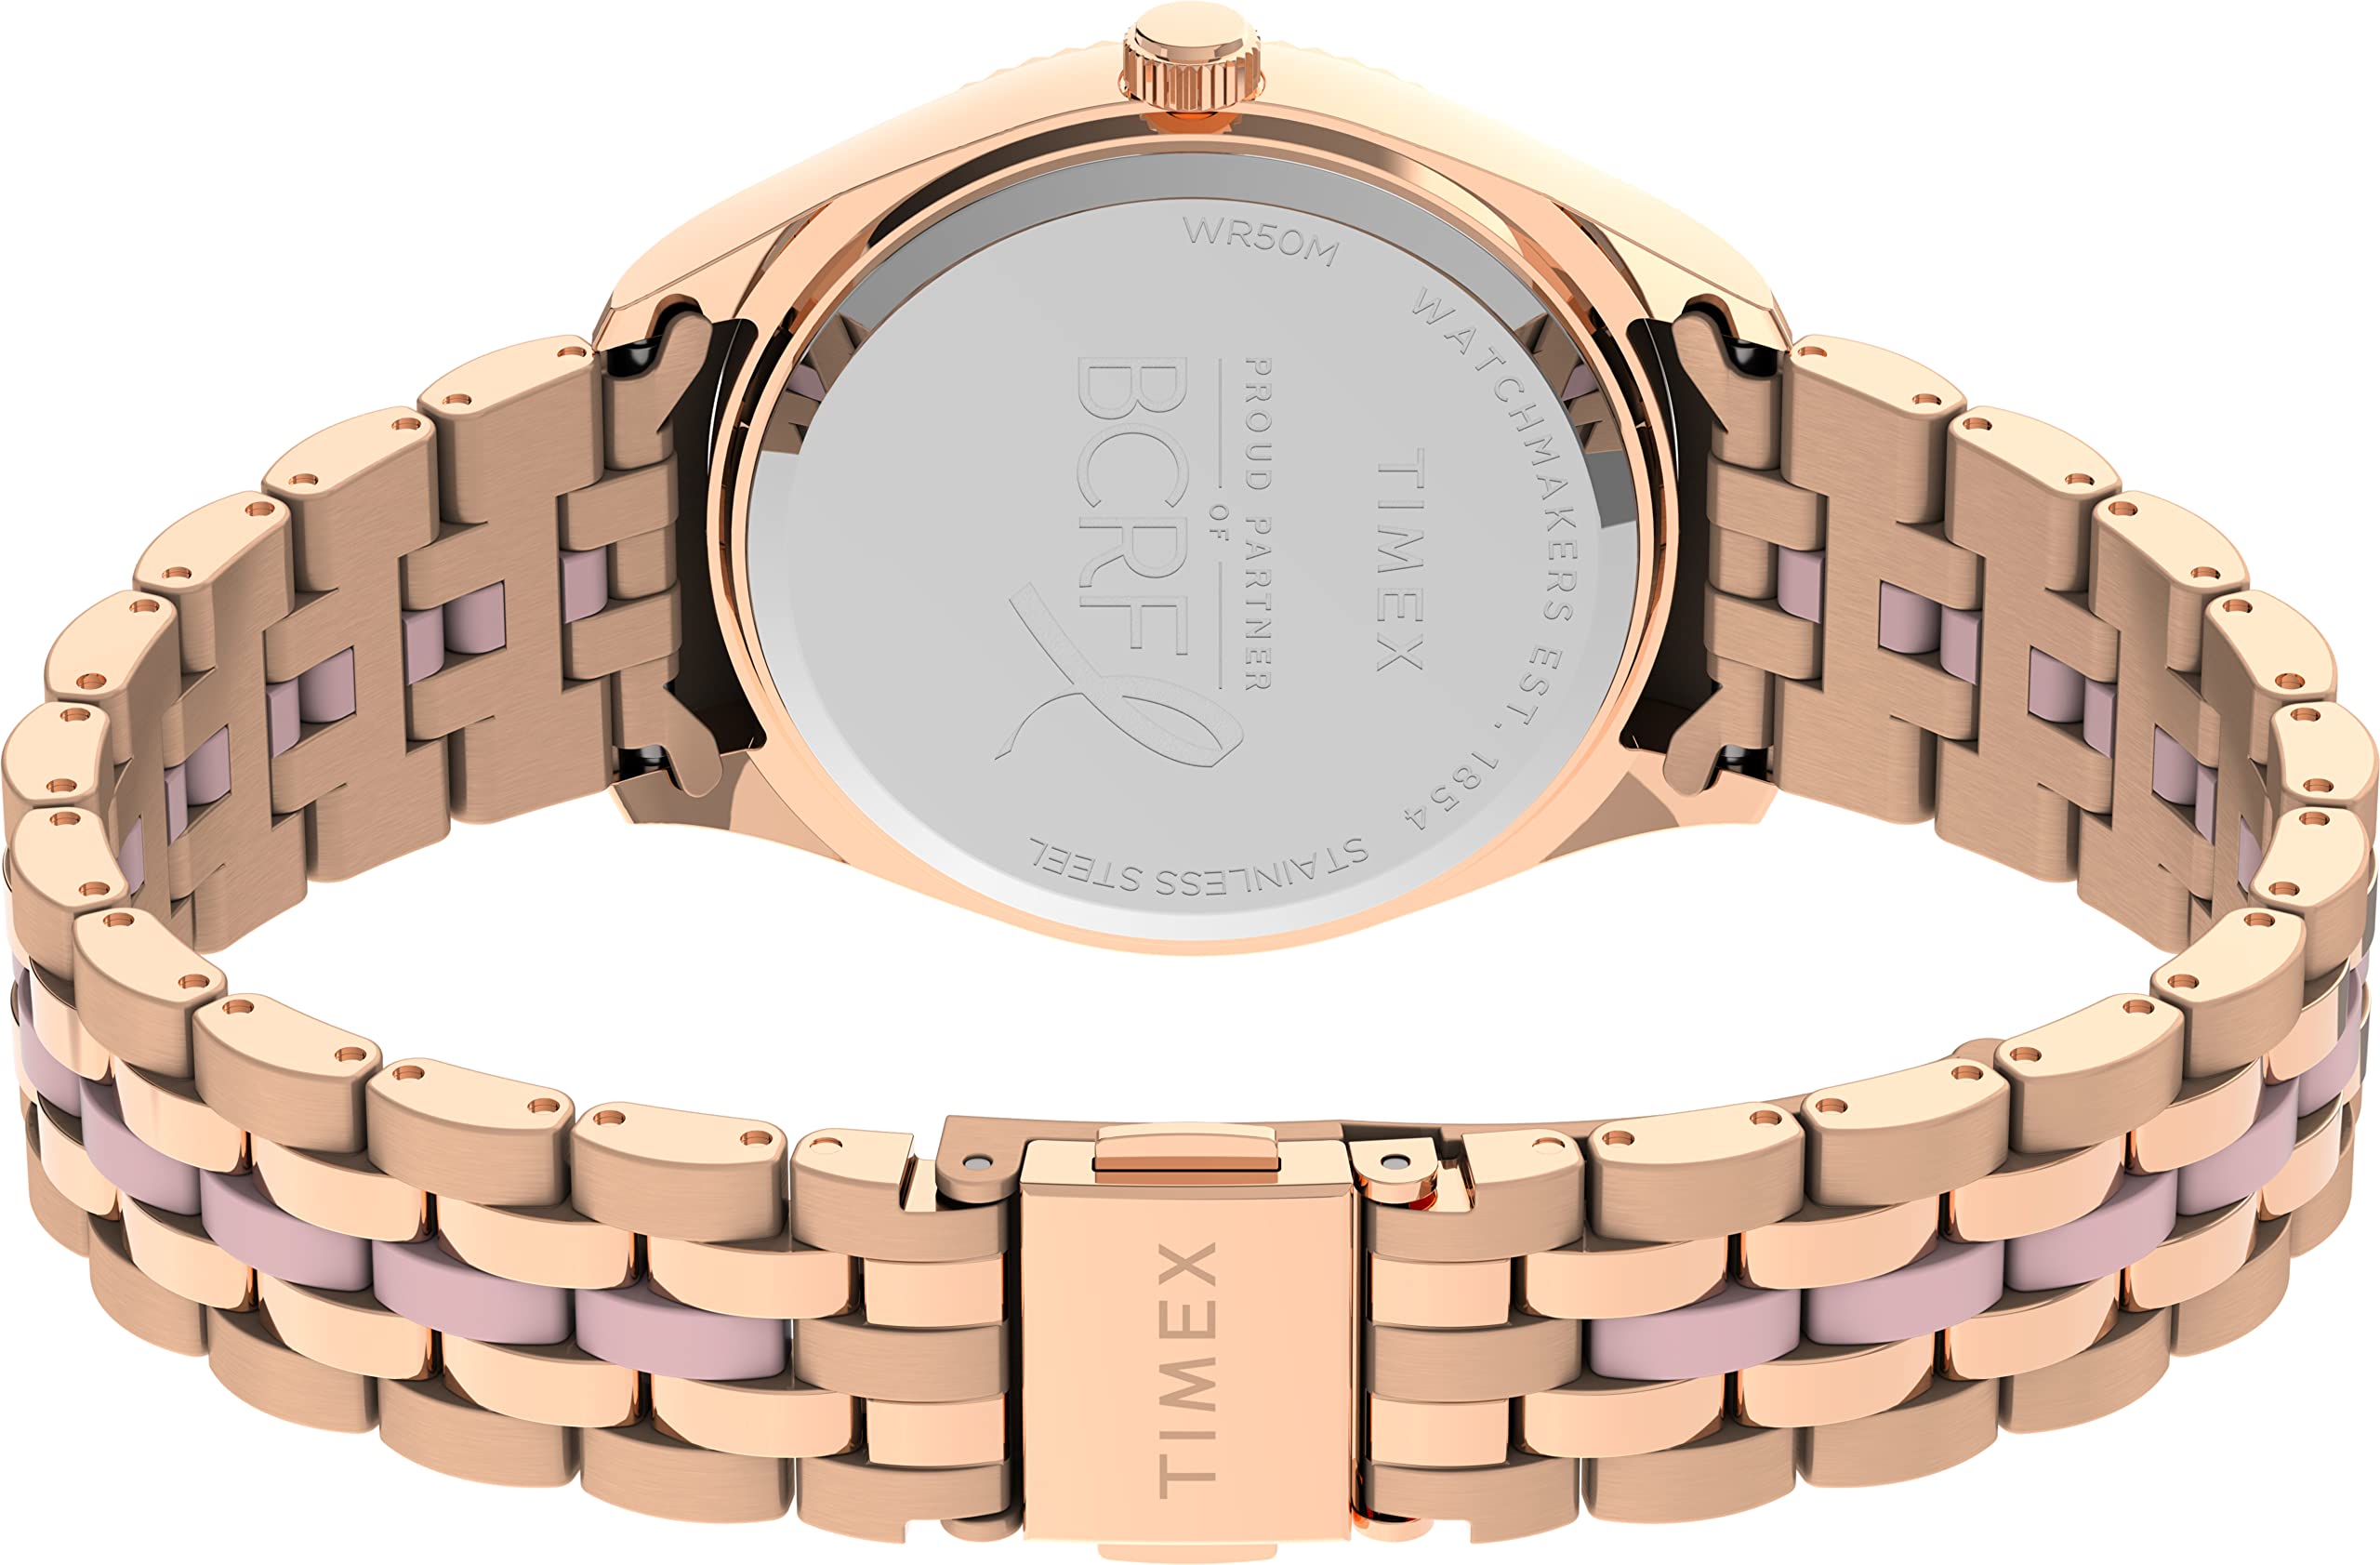 Timex Women's Waterbury Legacy x BCRF 36mm Watch - Rose Gold-Tone Bracelet Pink Dial Rose Gold-Tone Case